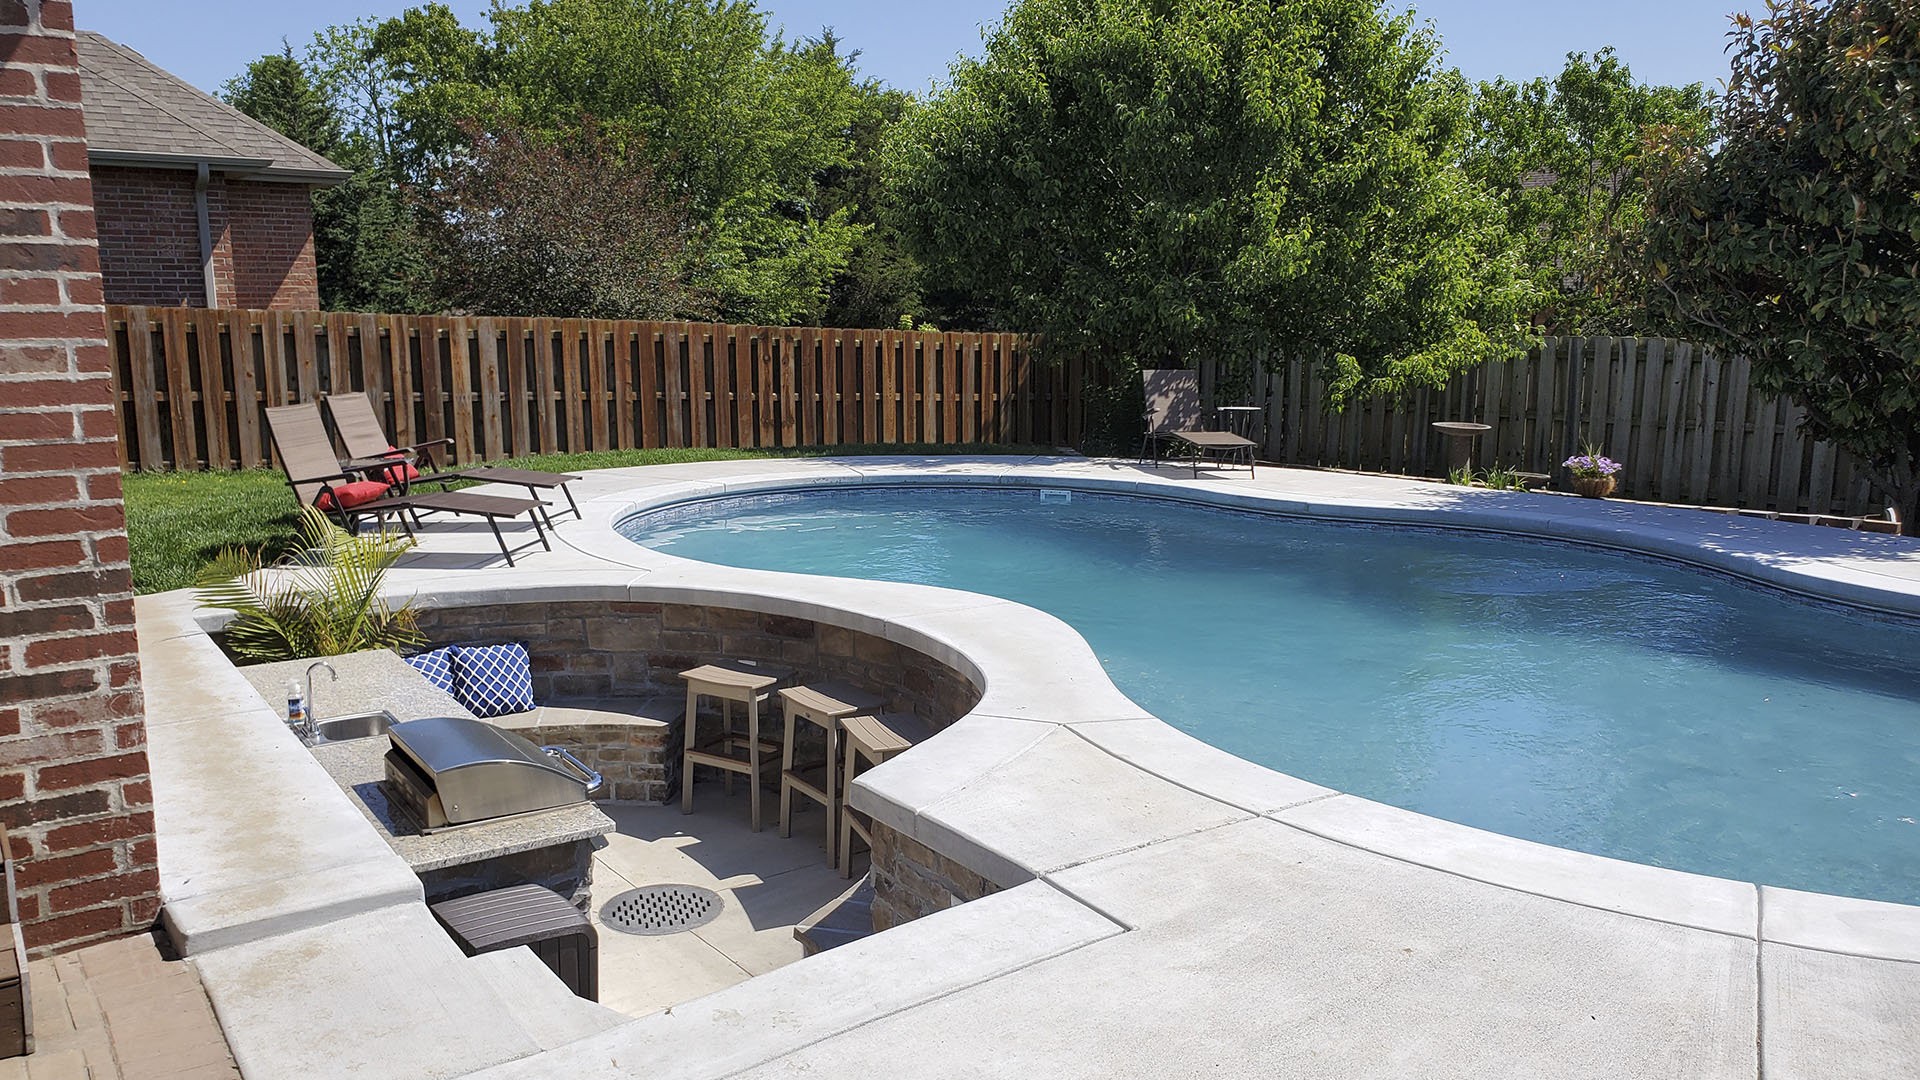 Clark & Sons Pools - Backyard Pool Construction